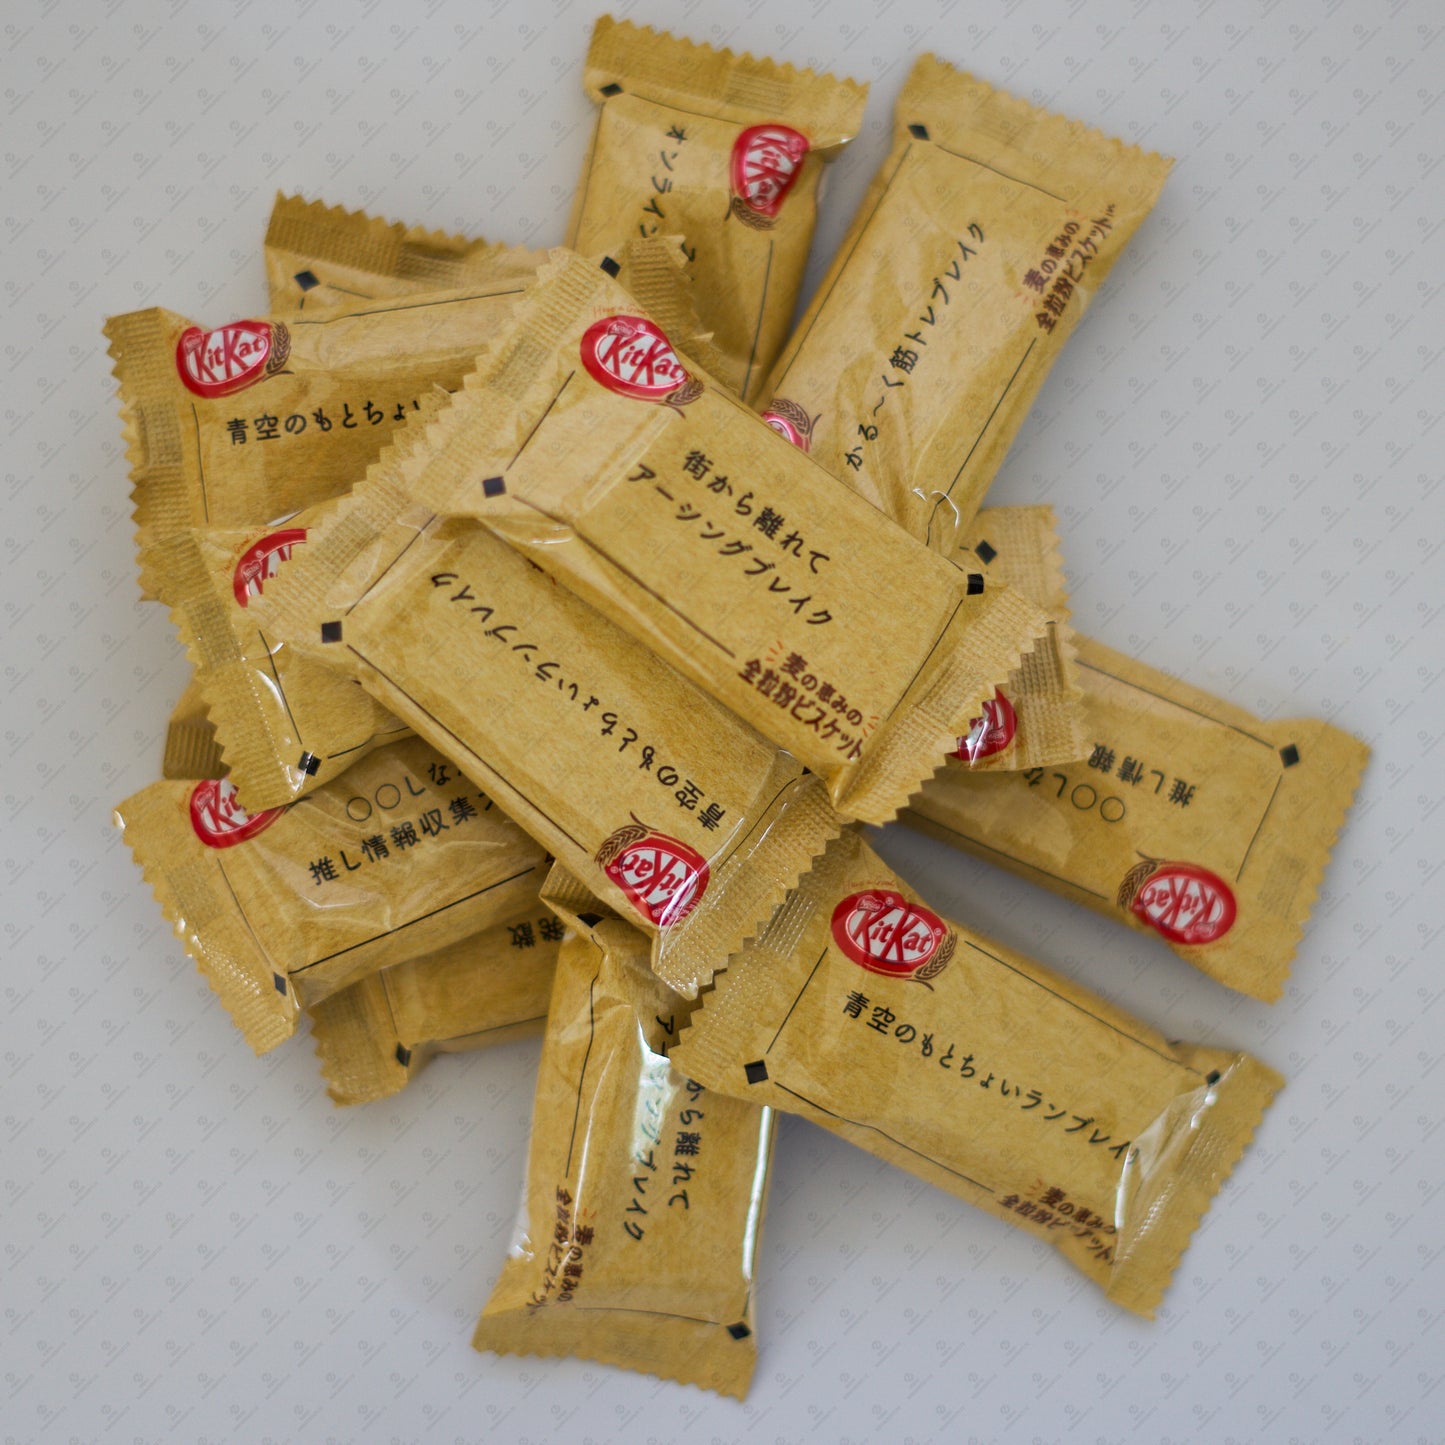 Expired - Nestle Japanese KitKat Mugi Whole Grain Biscuit Mini Bars 11 Pcs